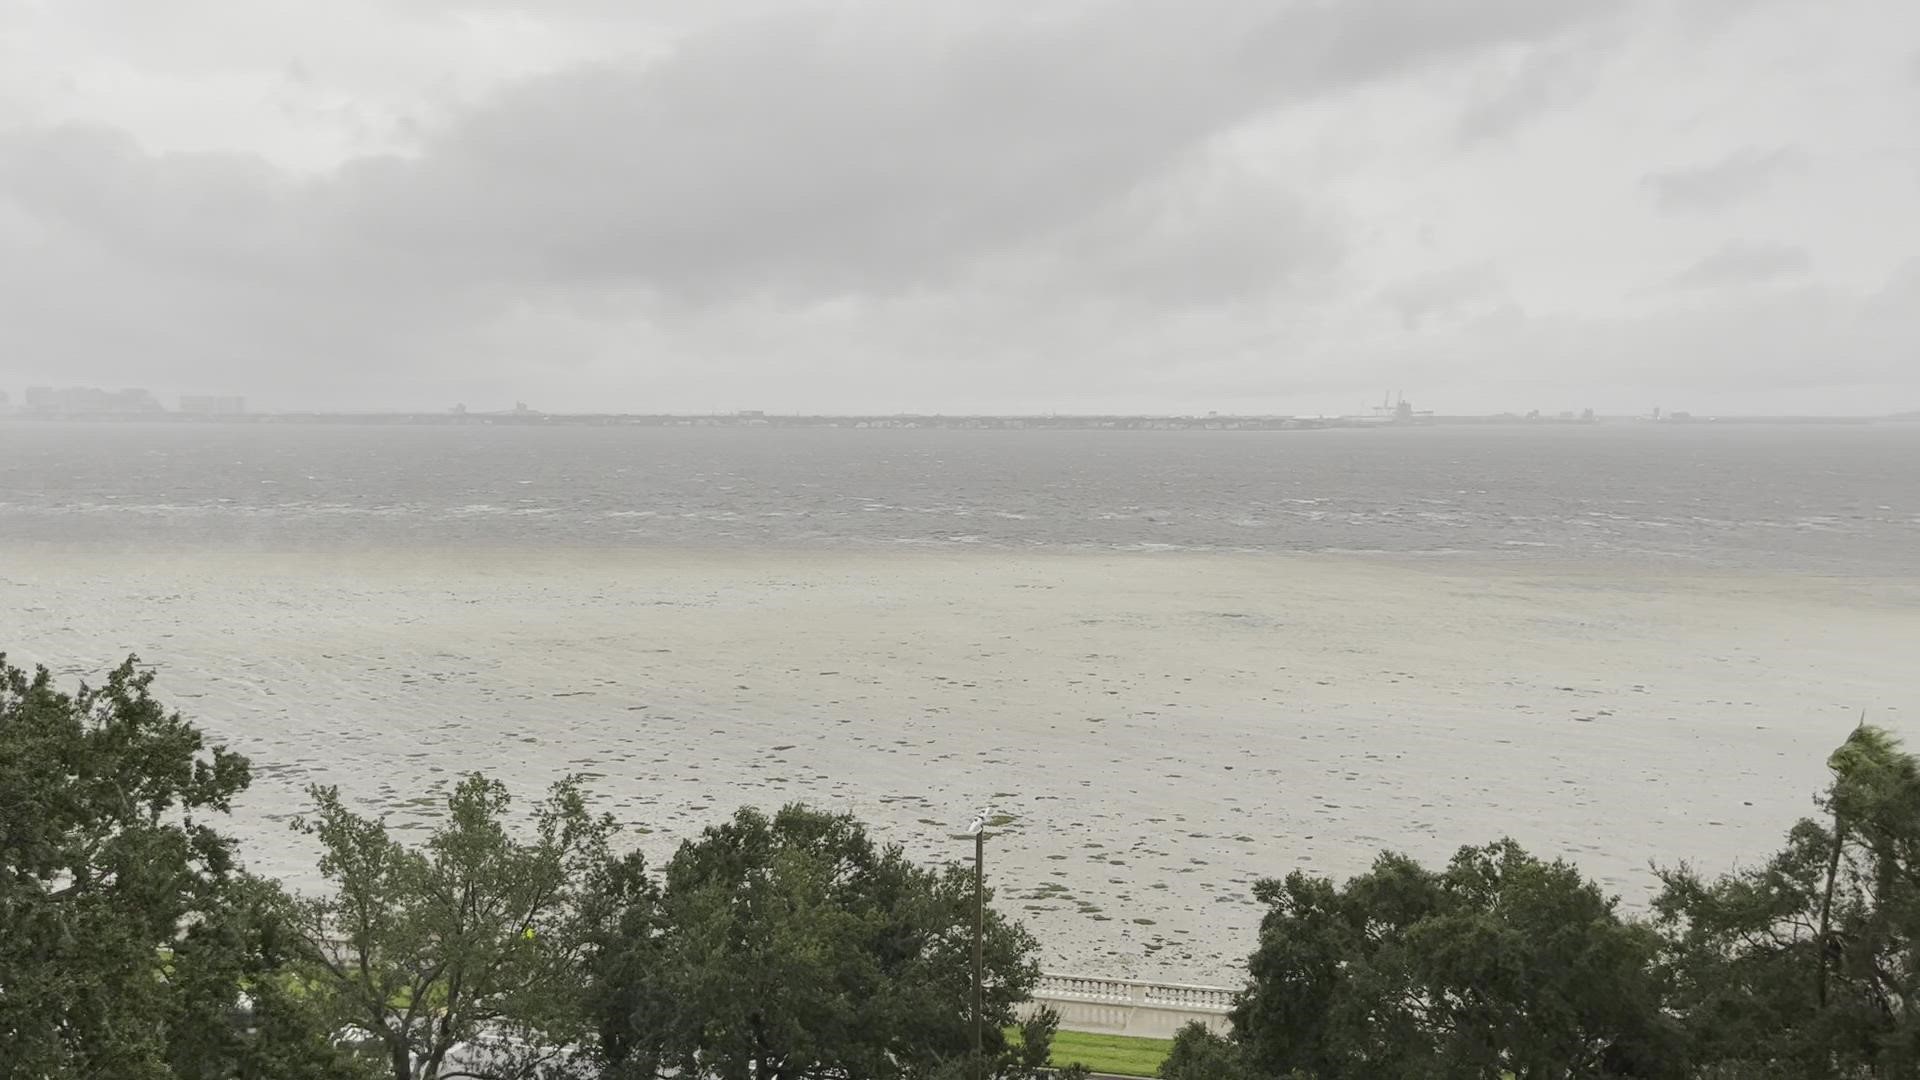 Tampa bay eerily empty ahead of the hurricane